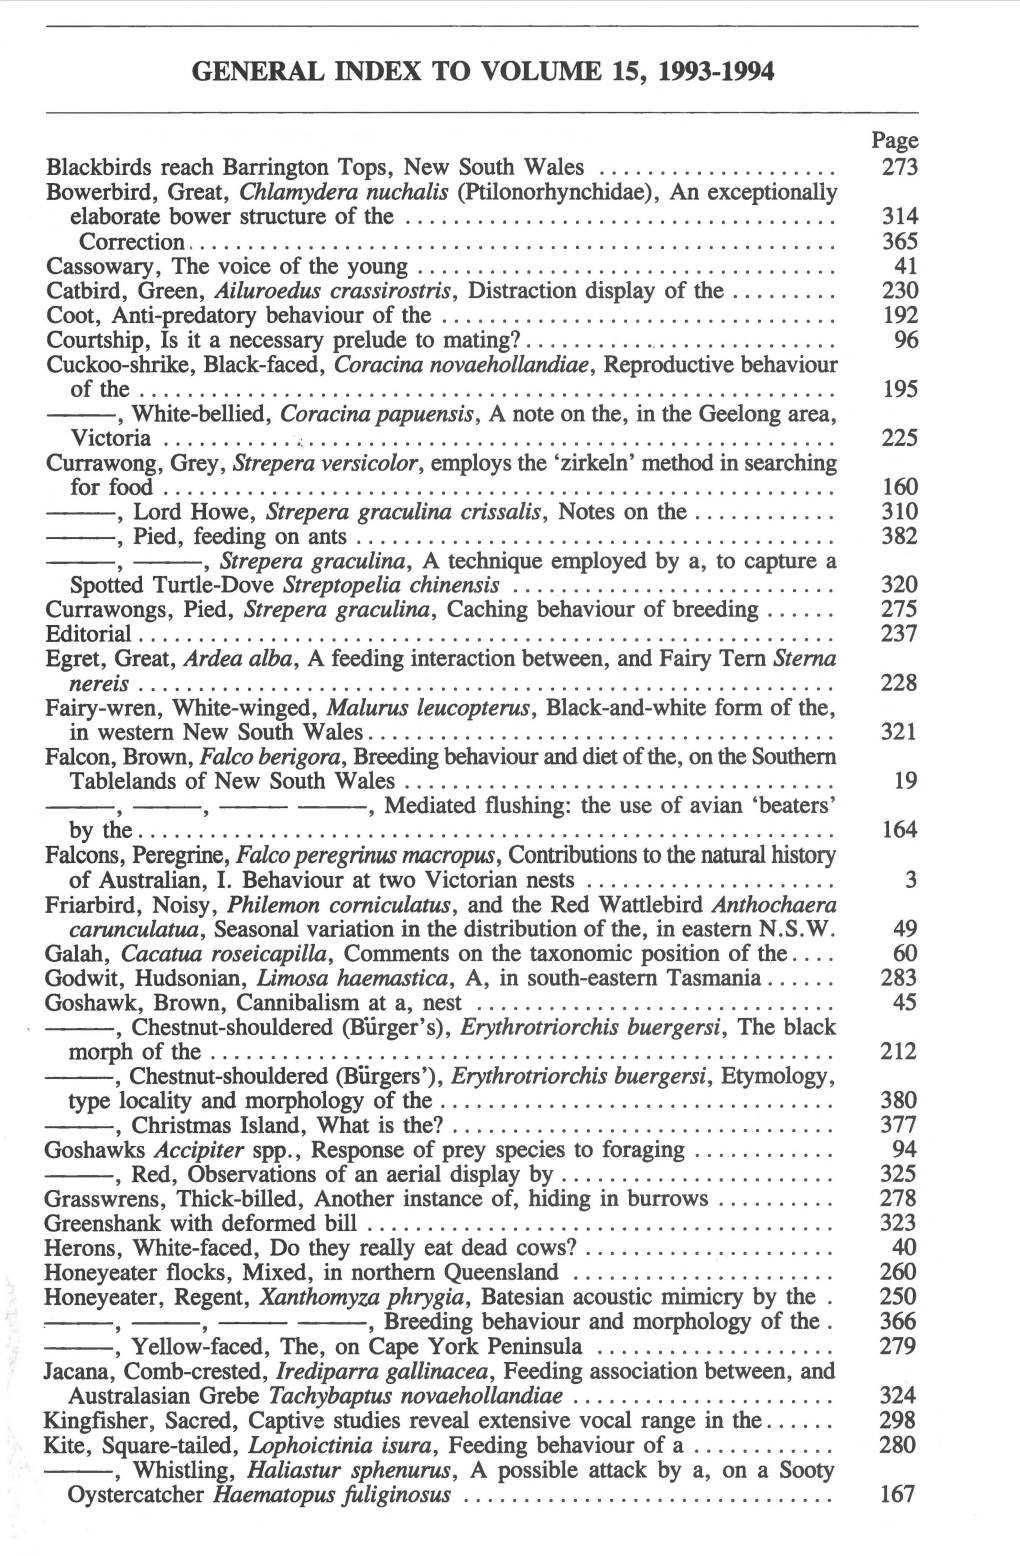 General Index to Volume 15, 1993-1994